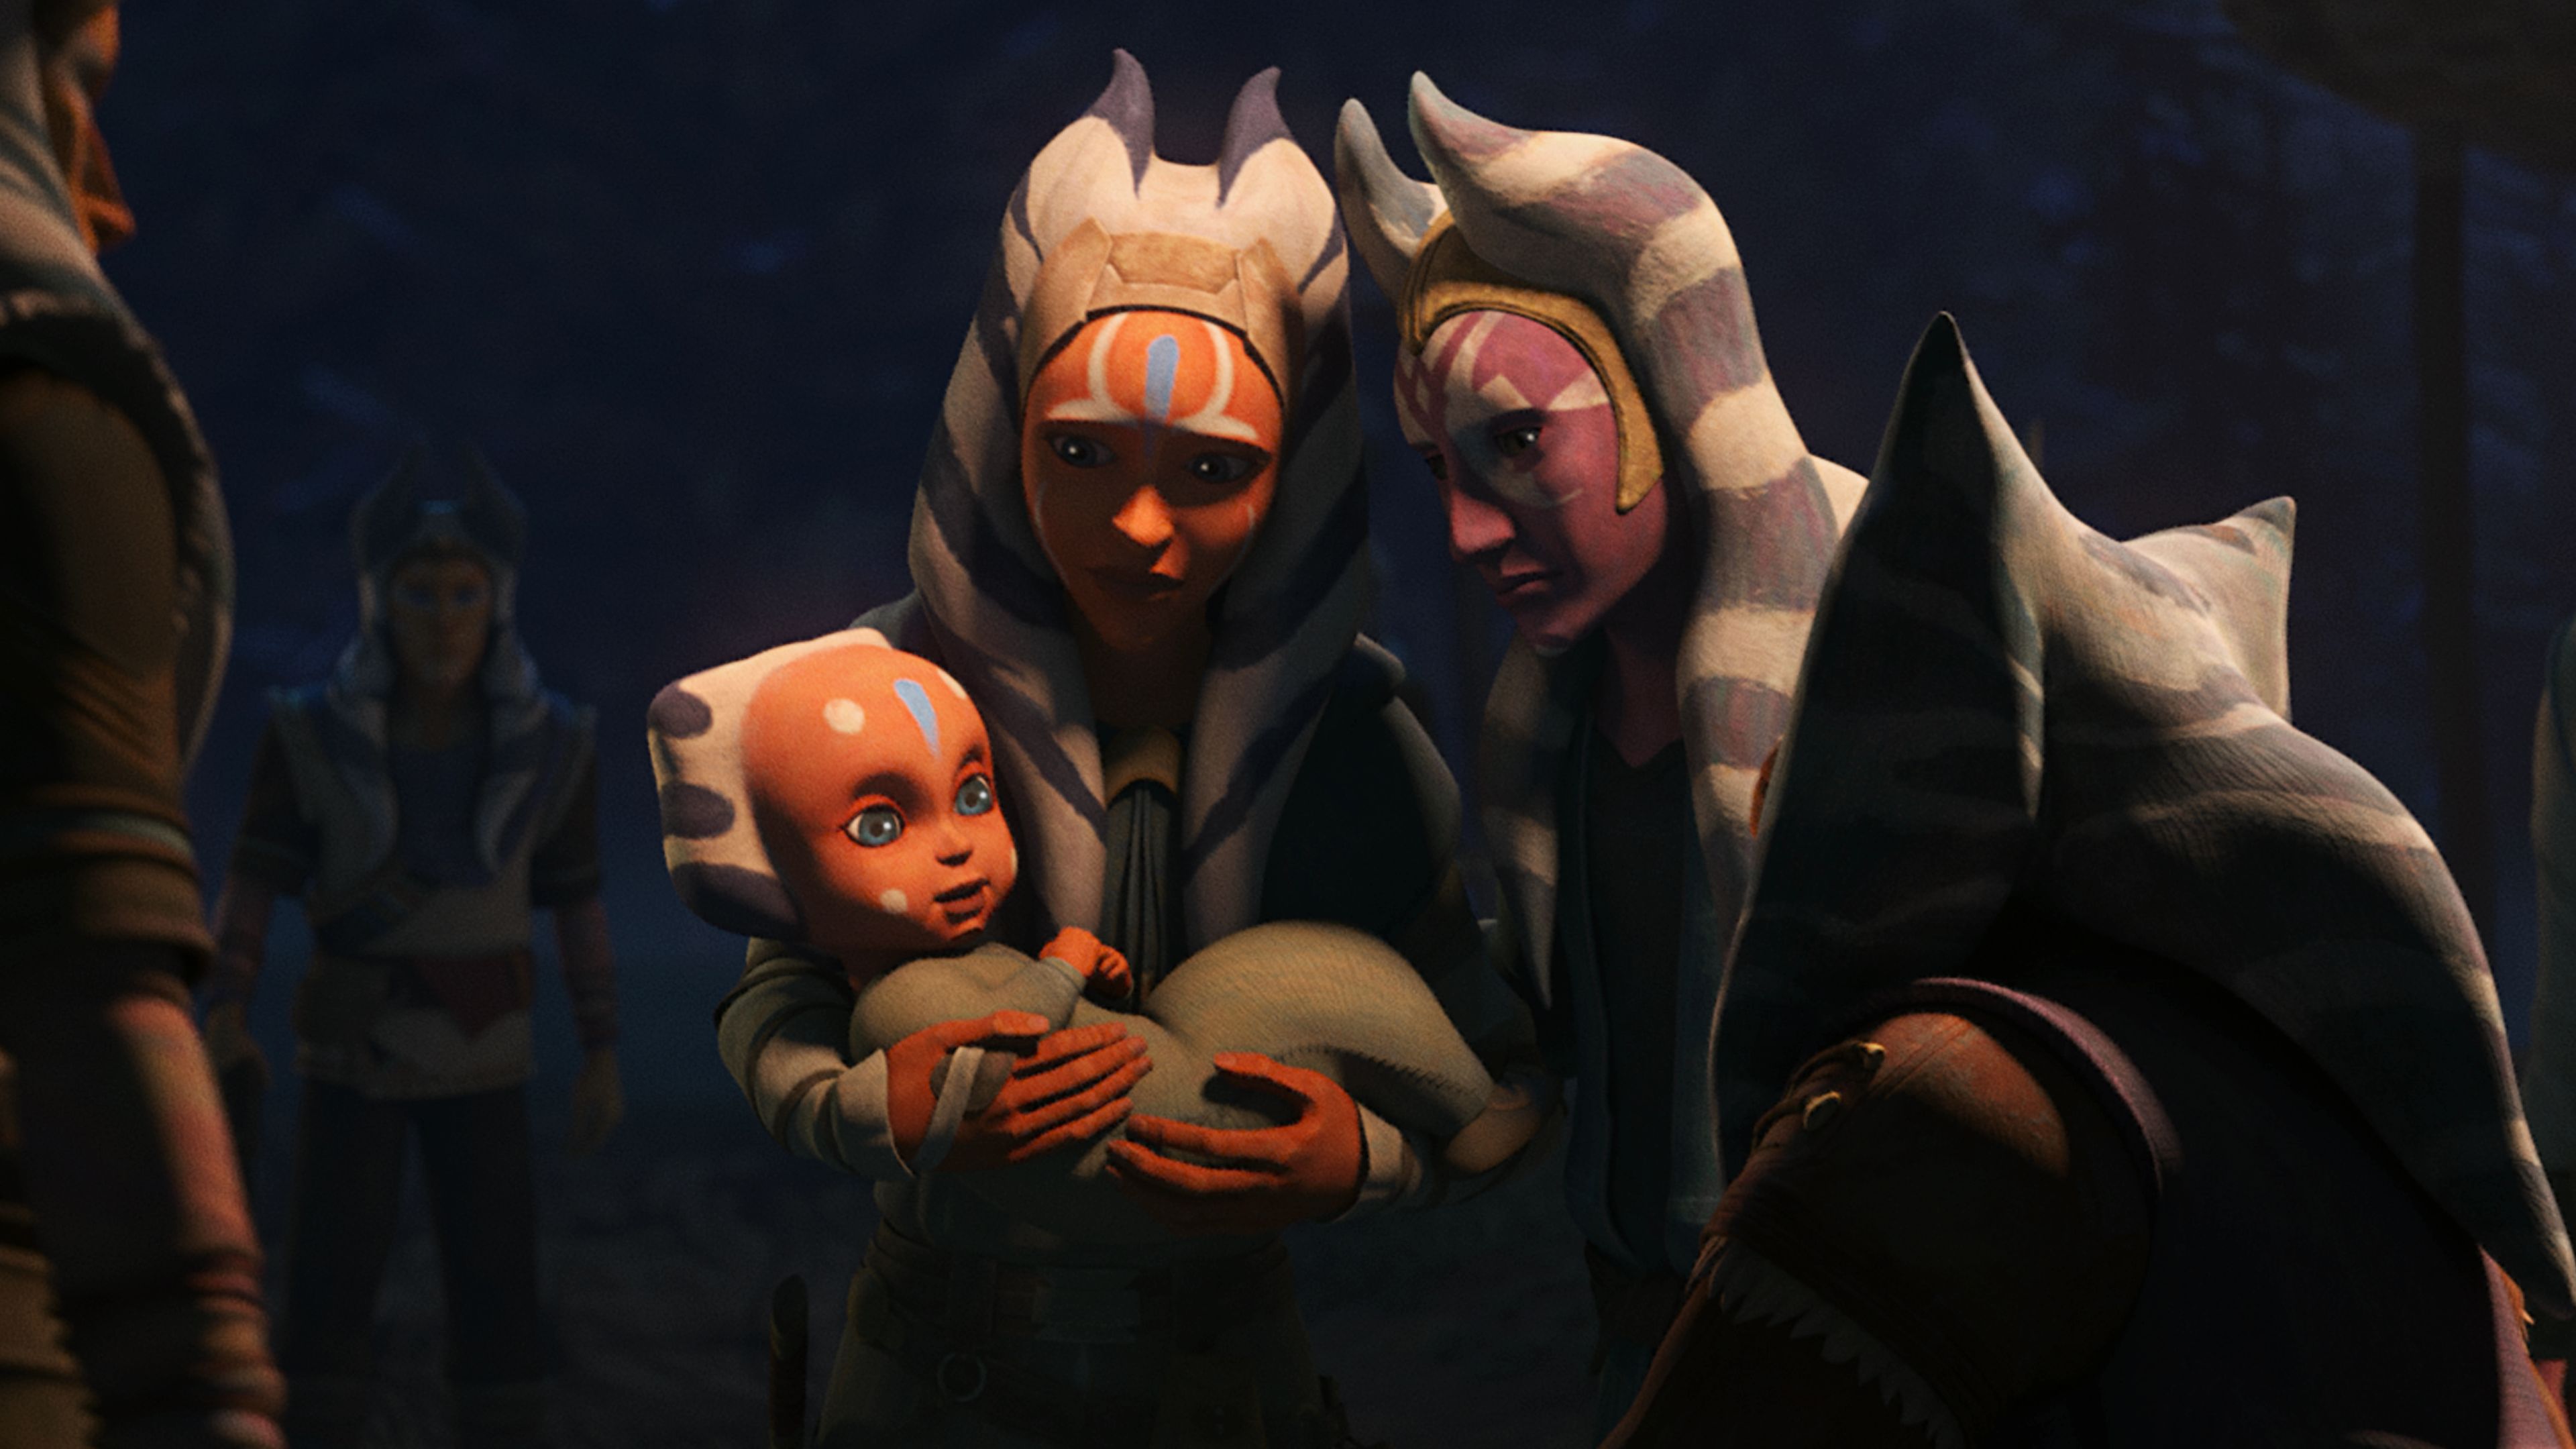 Jedi Junkies - Ahsoka returning Baby Jabba to the Hutts 😄